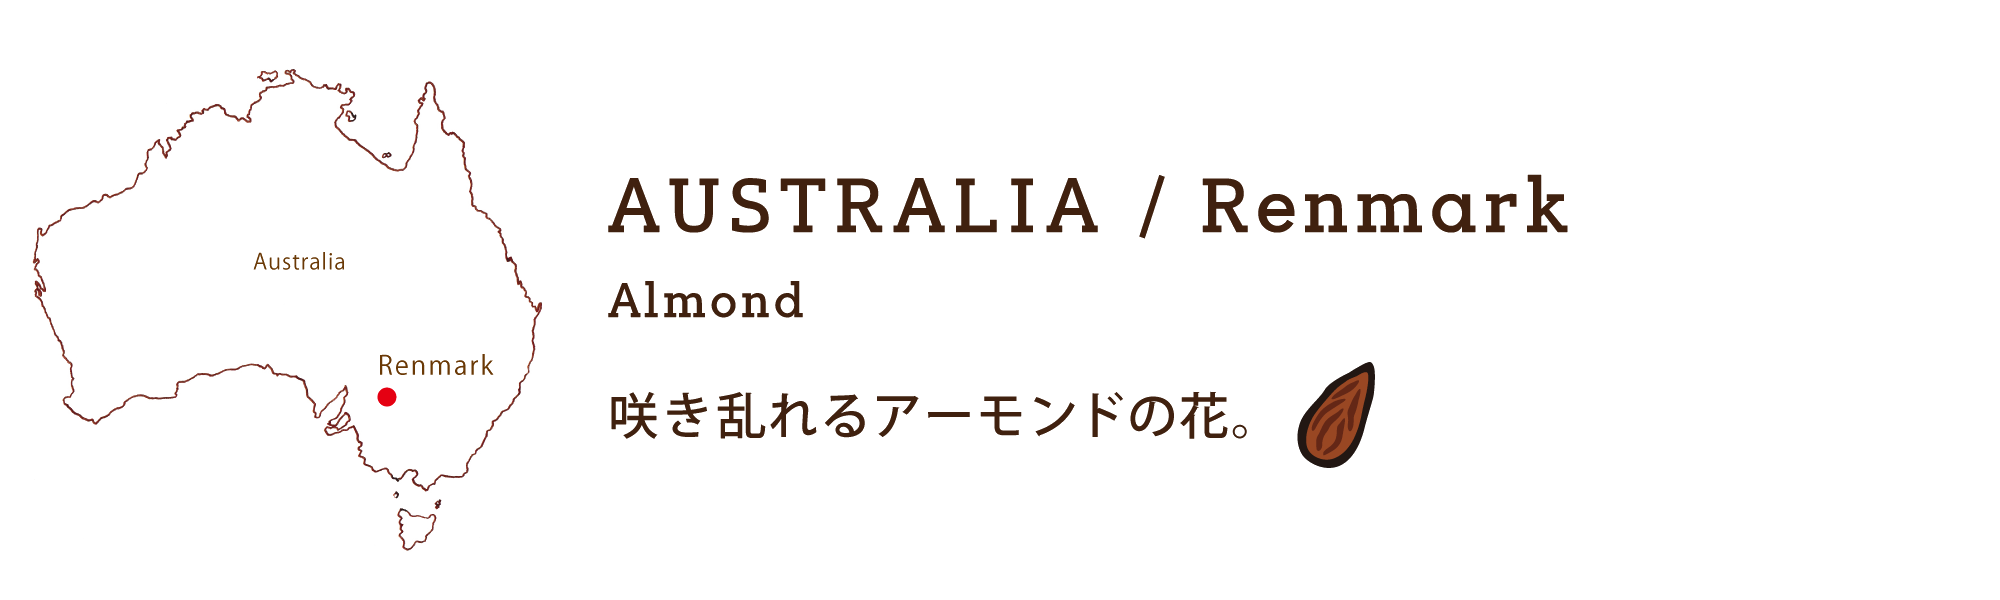 AUSTRALIA / Renmark